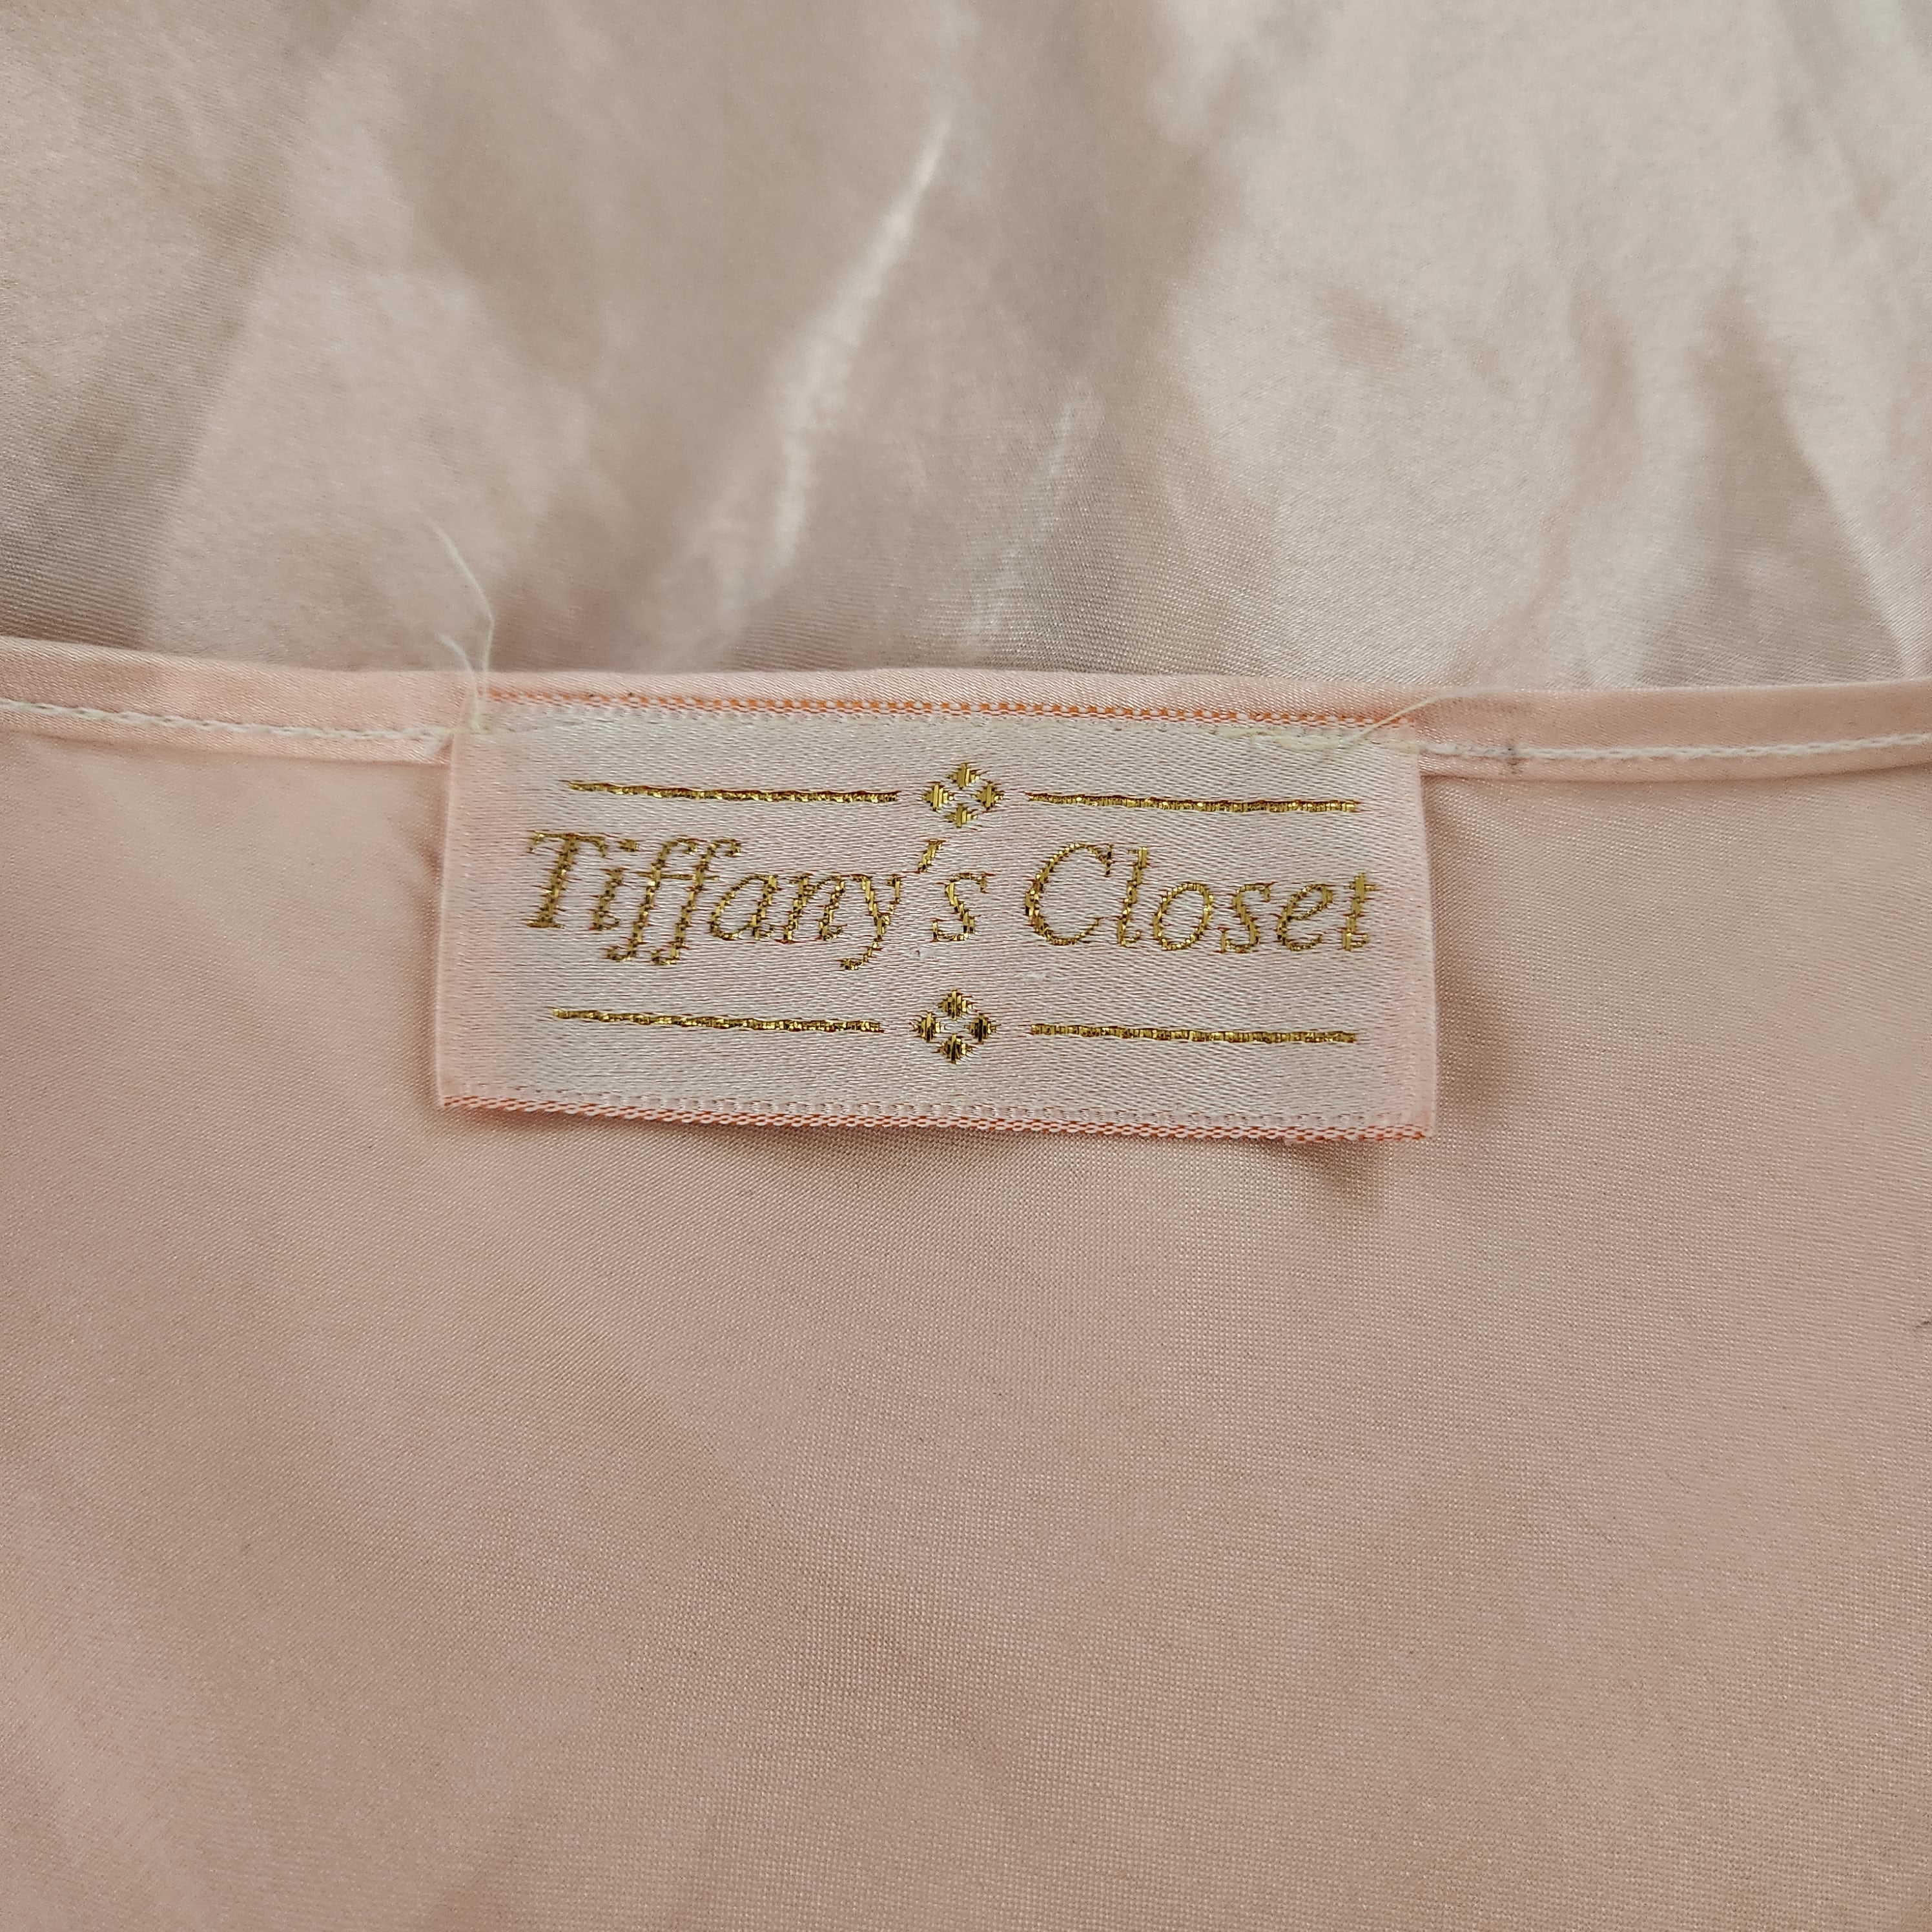 Tiffany's Closet Satin Nightgown Full Length Slip Size Large